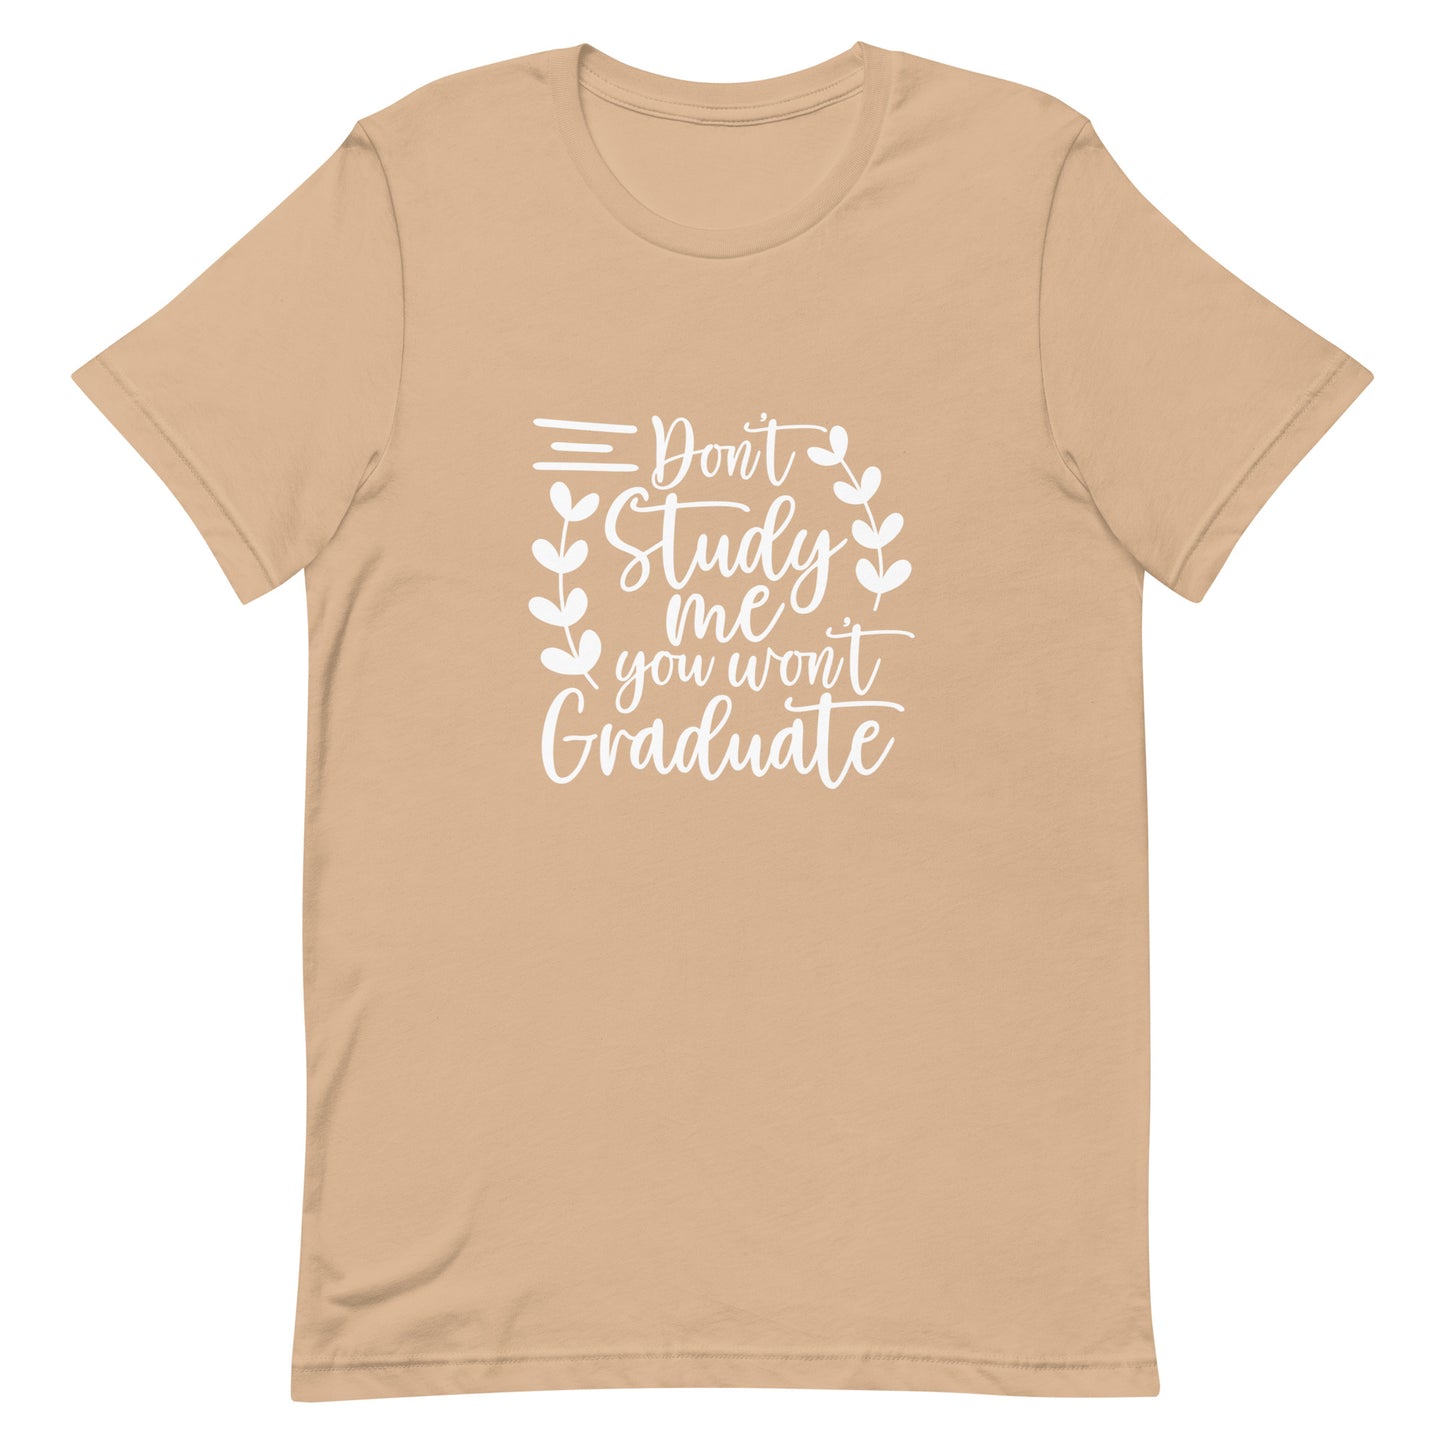 Don't Study Me You Won't Graduate Unisex T-shirt